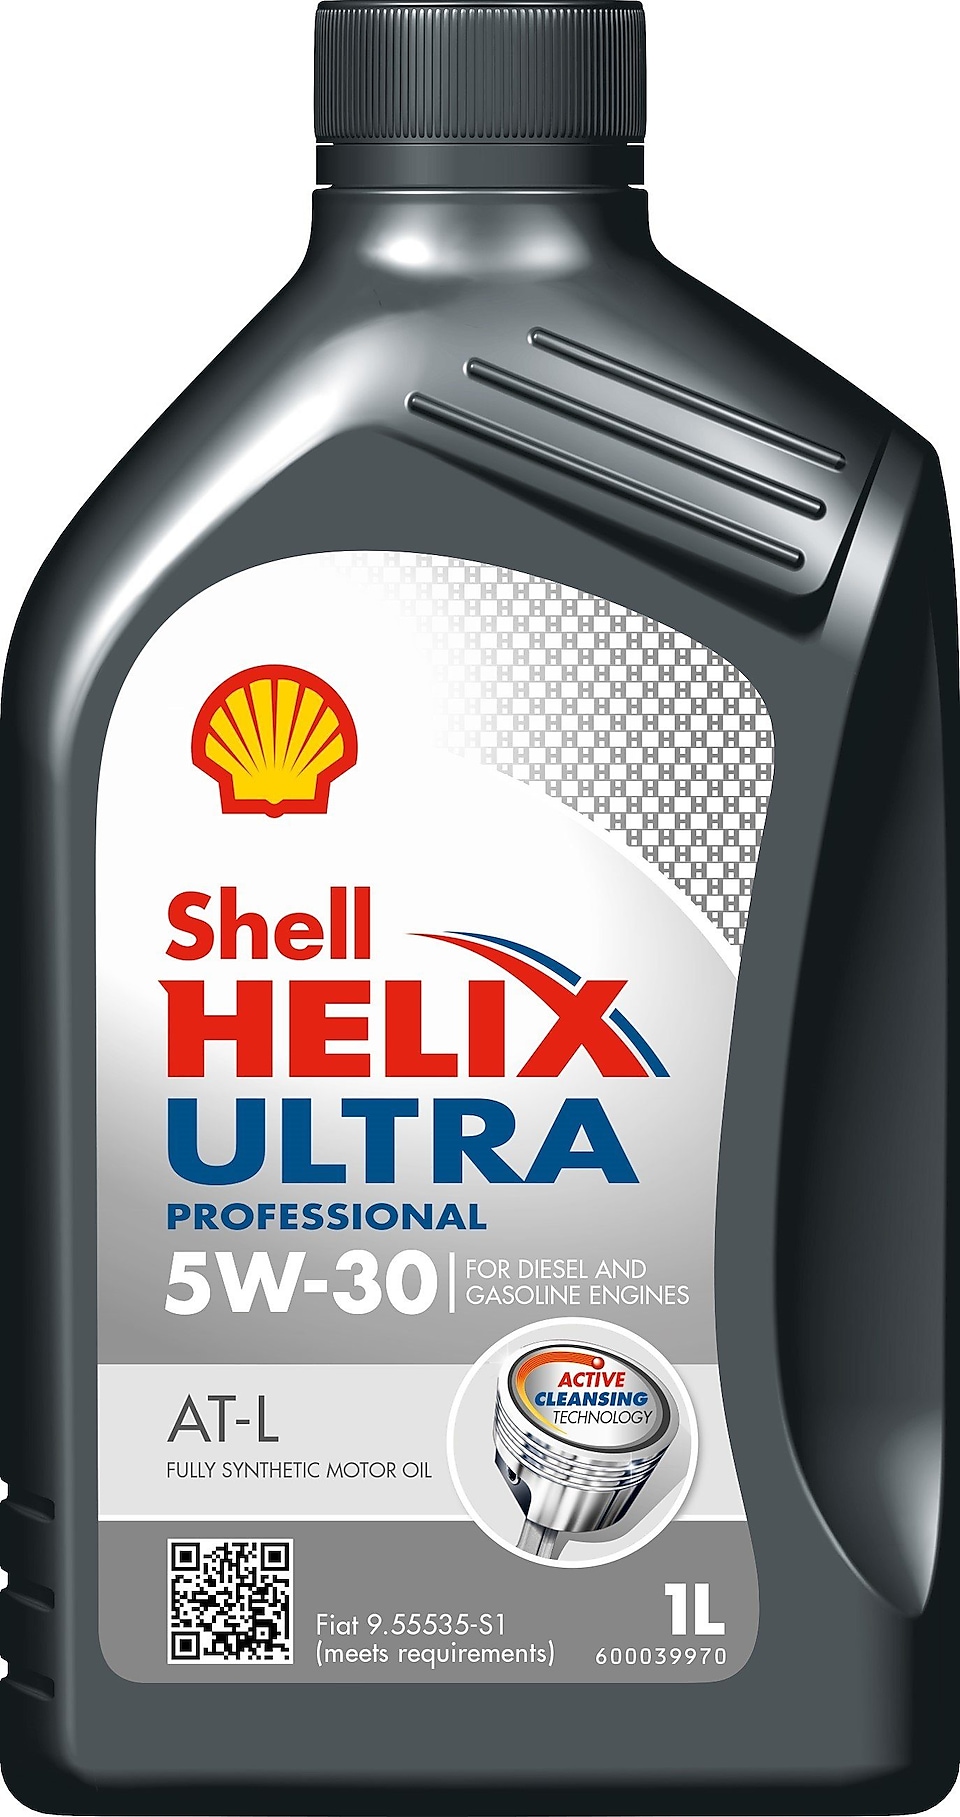 Helix Ultra Professional AT-L 5W-30